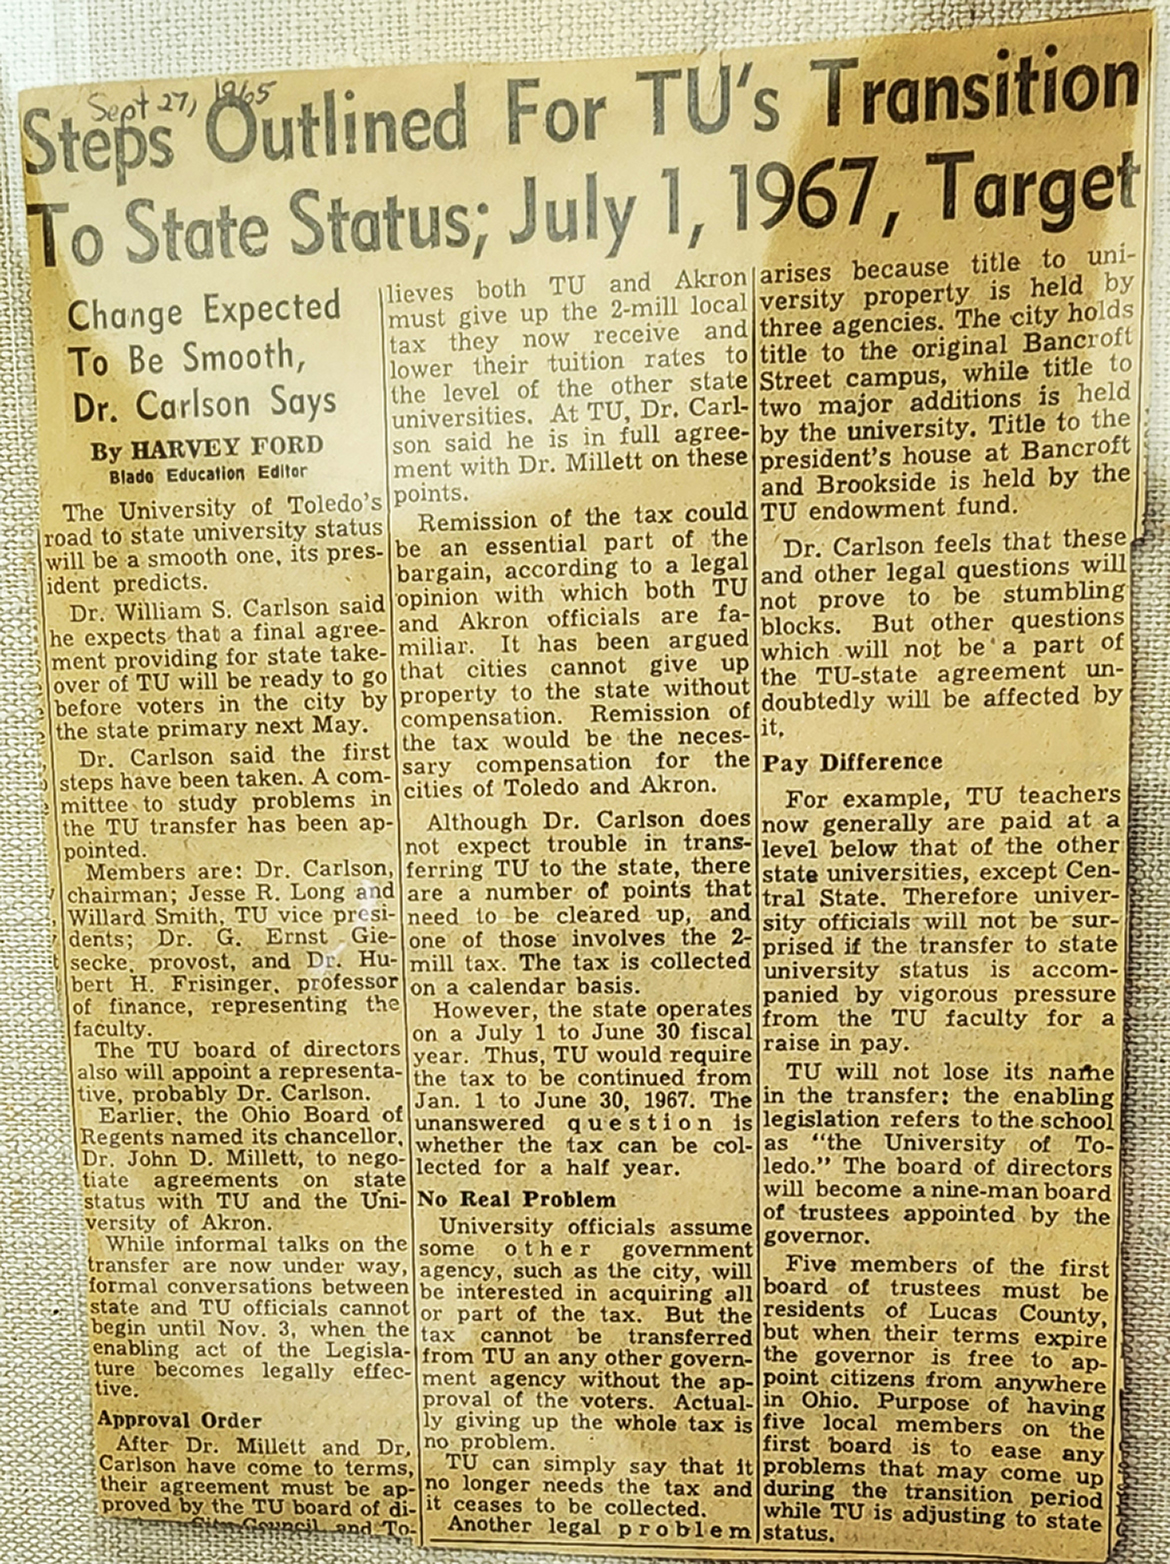 Blade Article, September 27, 1965: Steps Outlines for TU's transition to State Statusl July 1, 1967, Target